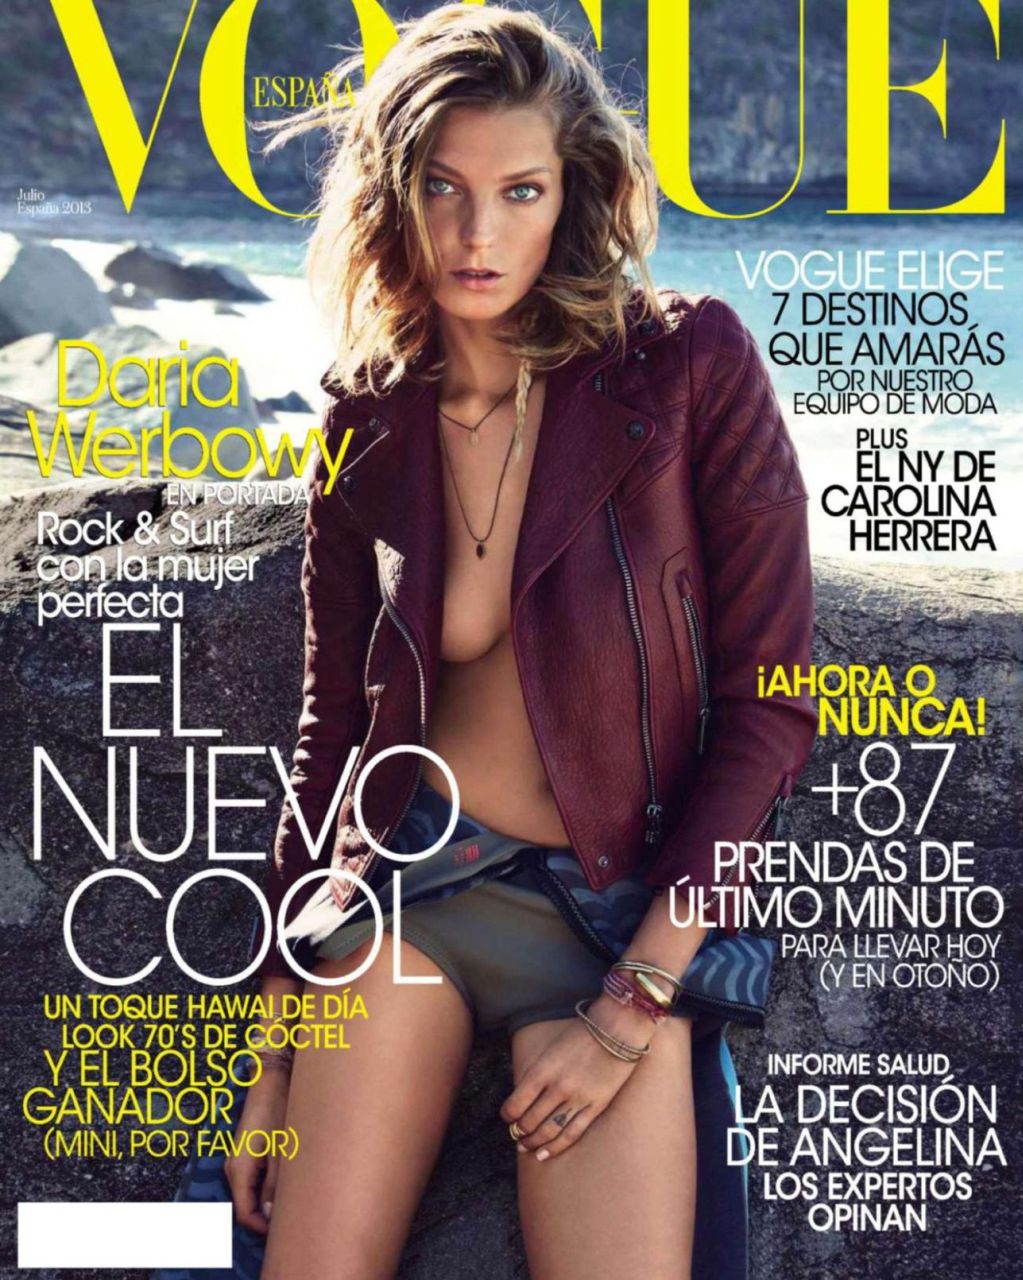 Daria Werbory - nagie piersi seksownej modelki w Vogue